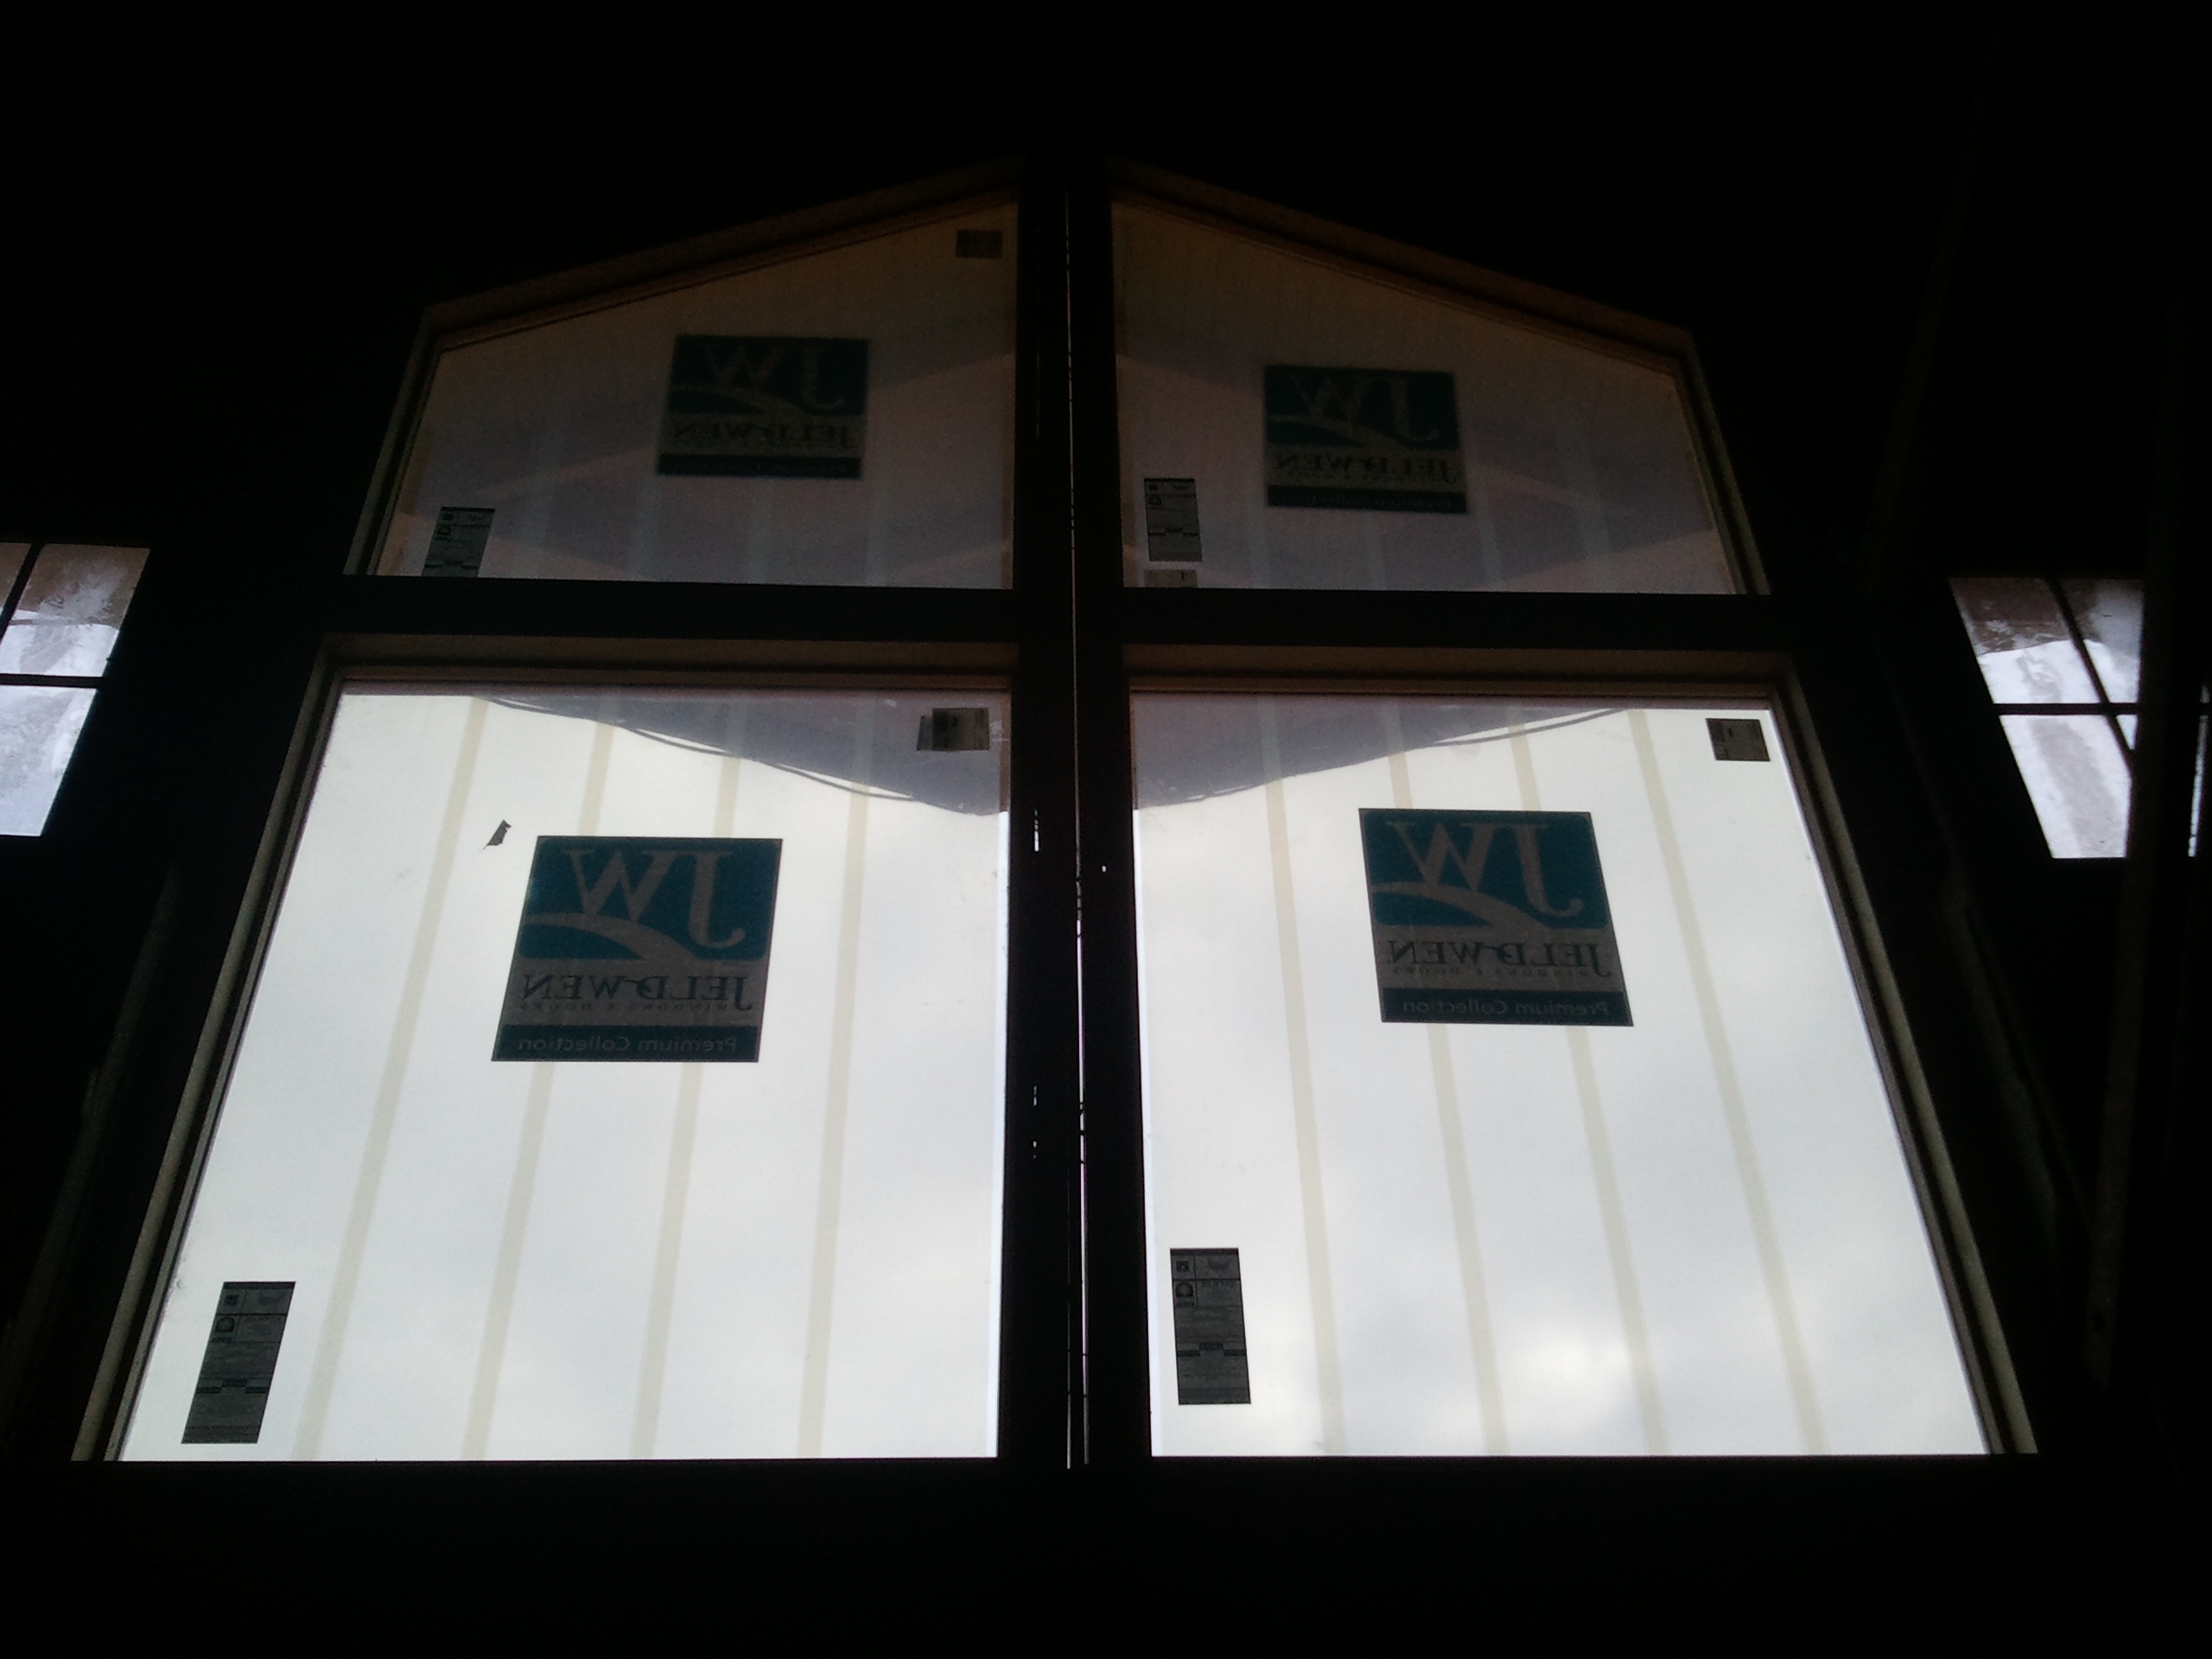 Barn Event Center - WinMock at Kinderton - New large window panes in the Loft Ballroom